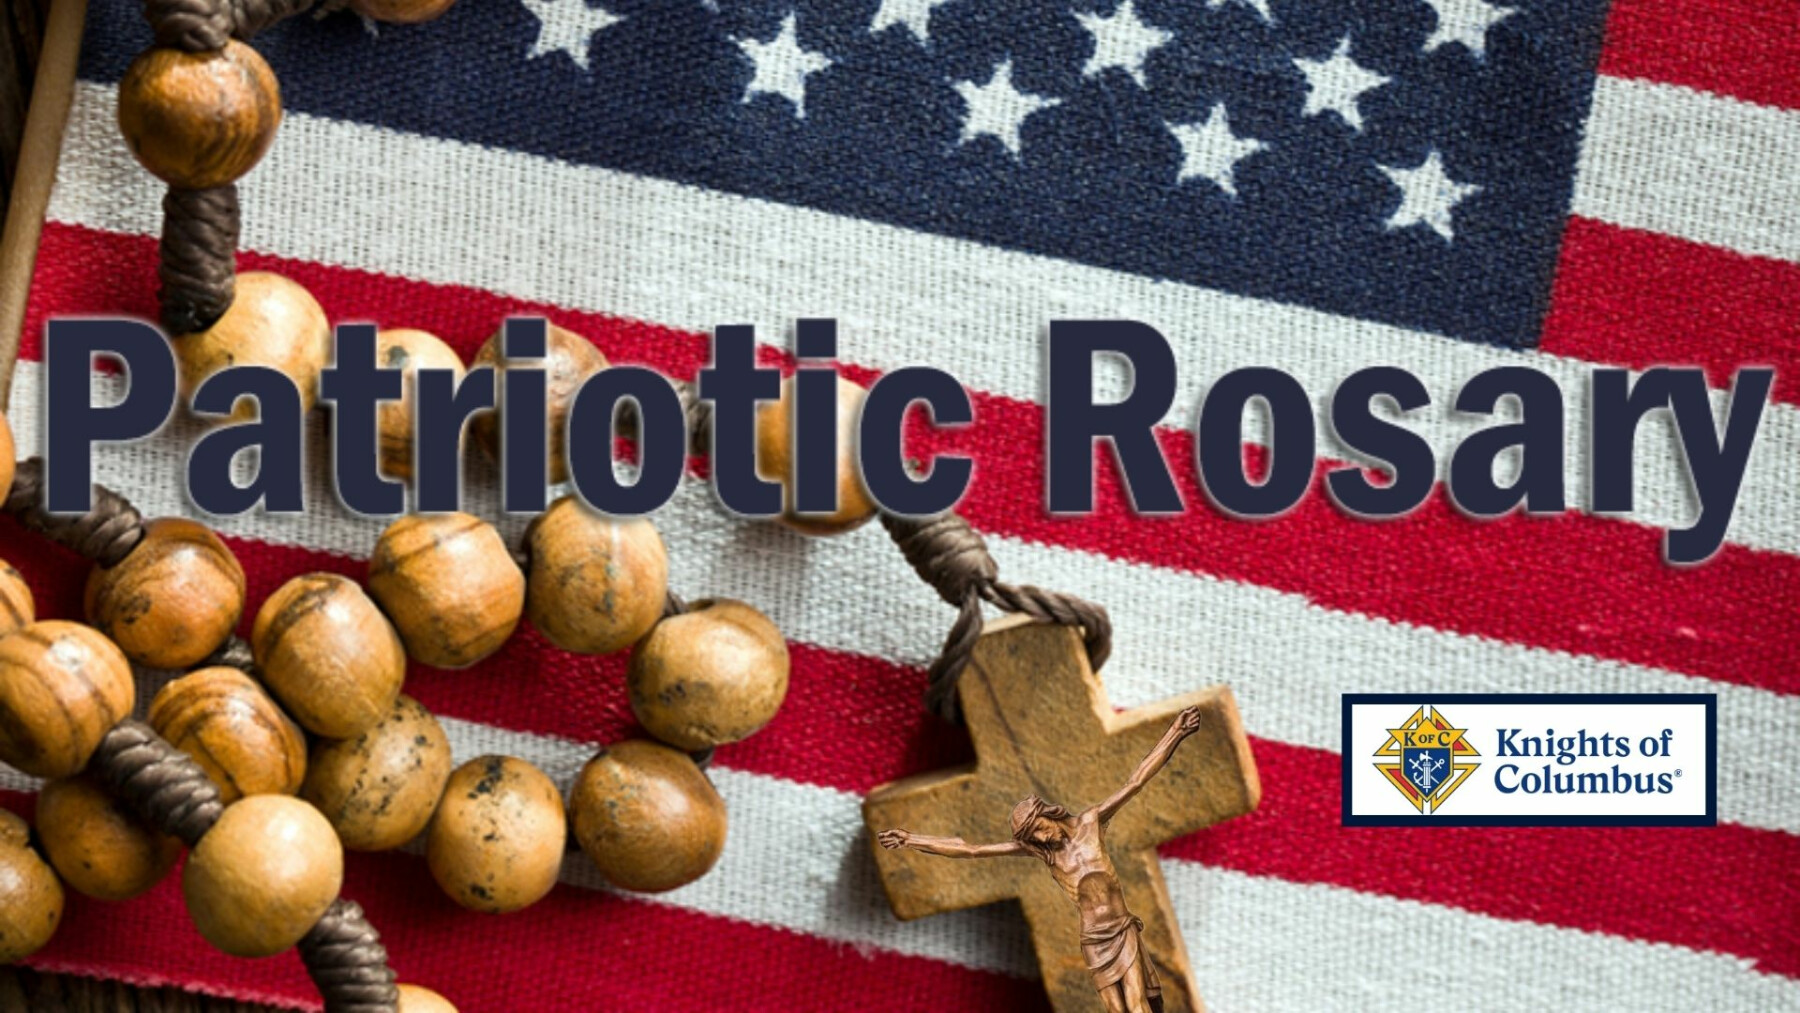 Patriotic Rosary